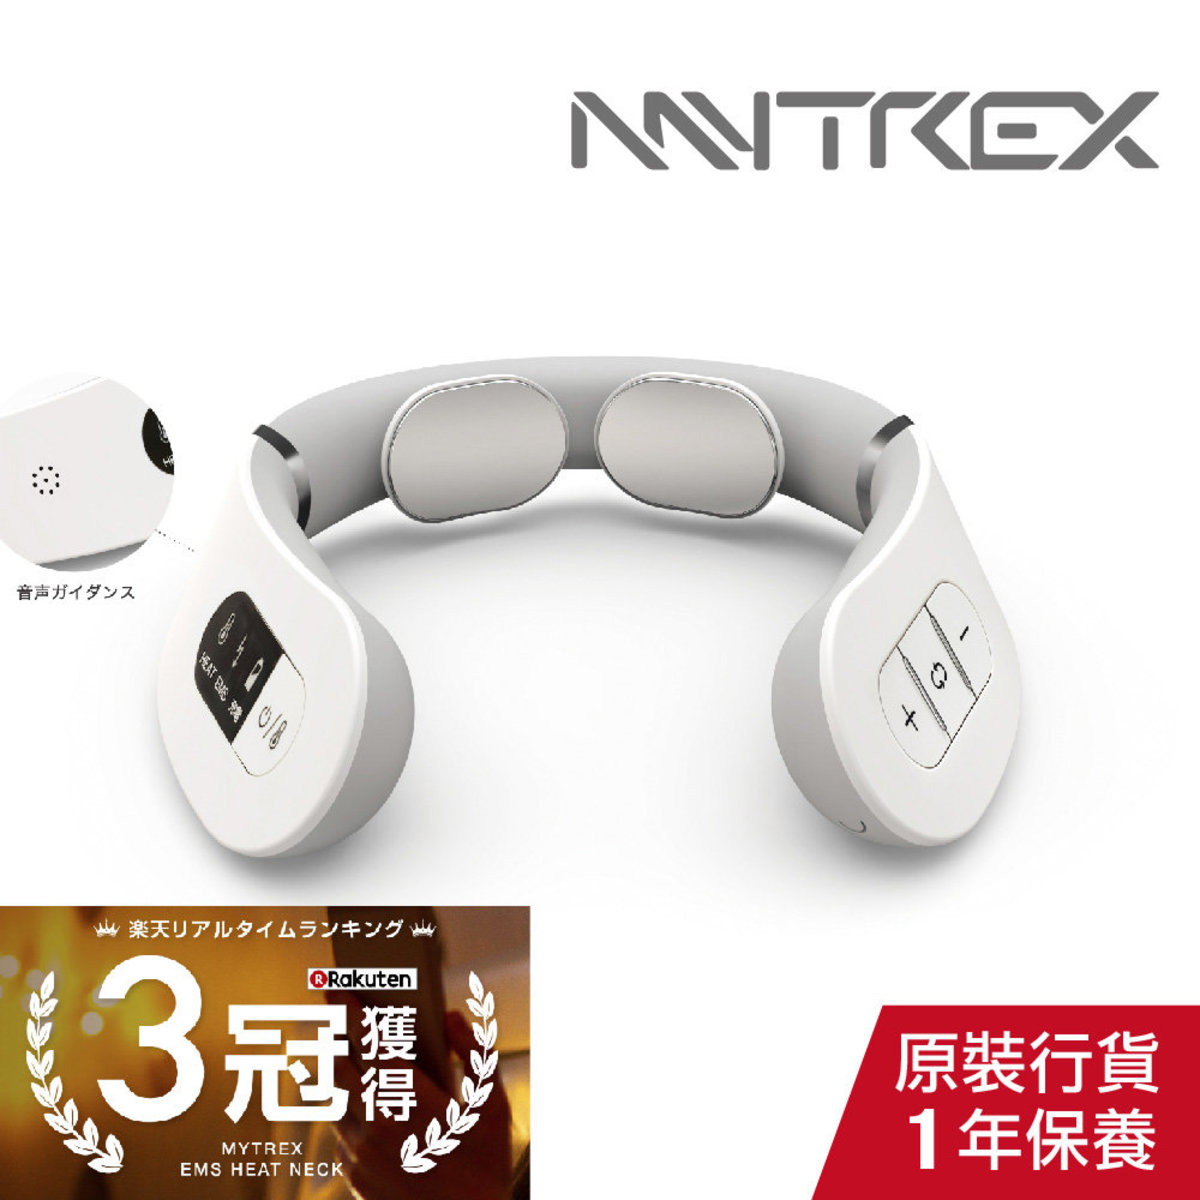 MYTREX | EMS HEAT NECK 充電式EMS溫感頭頸按摩儀日本品牌您家中的按摩 